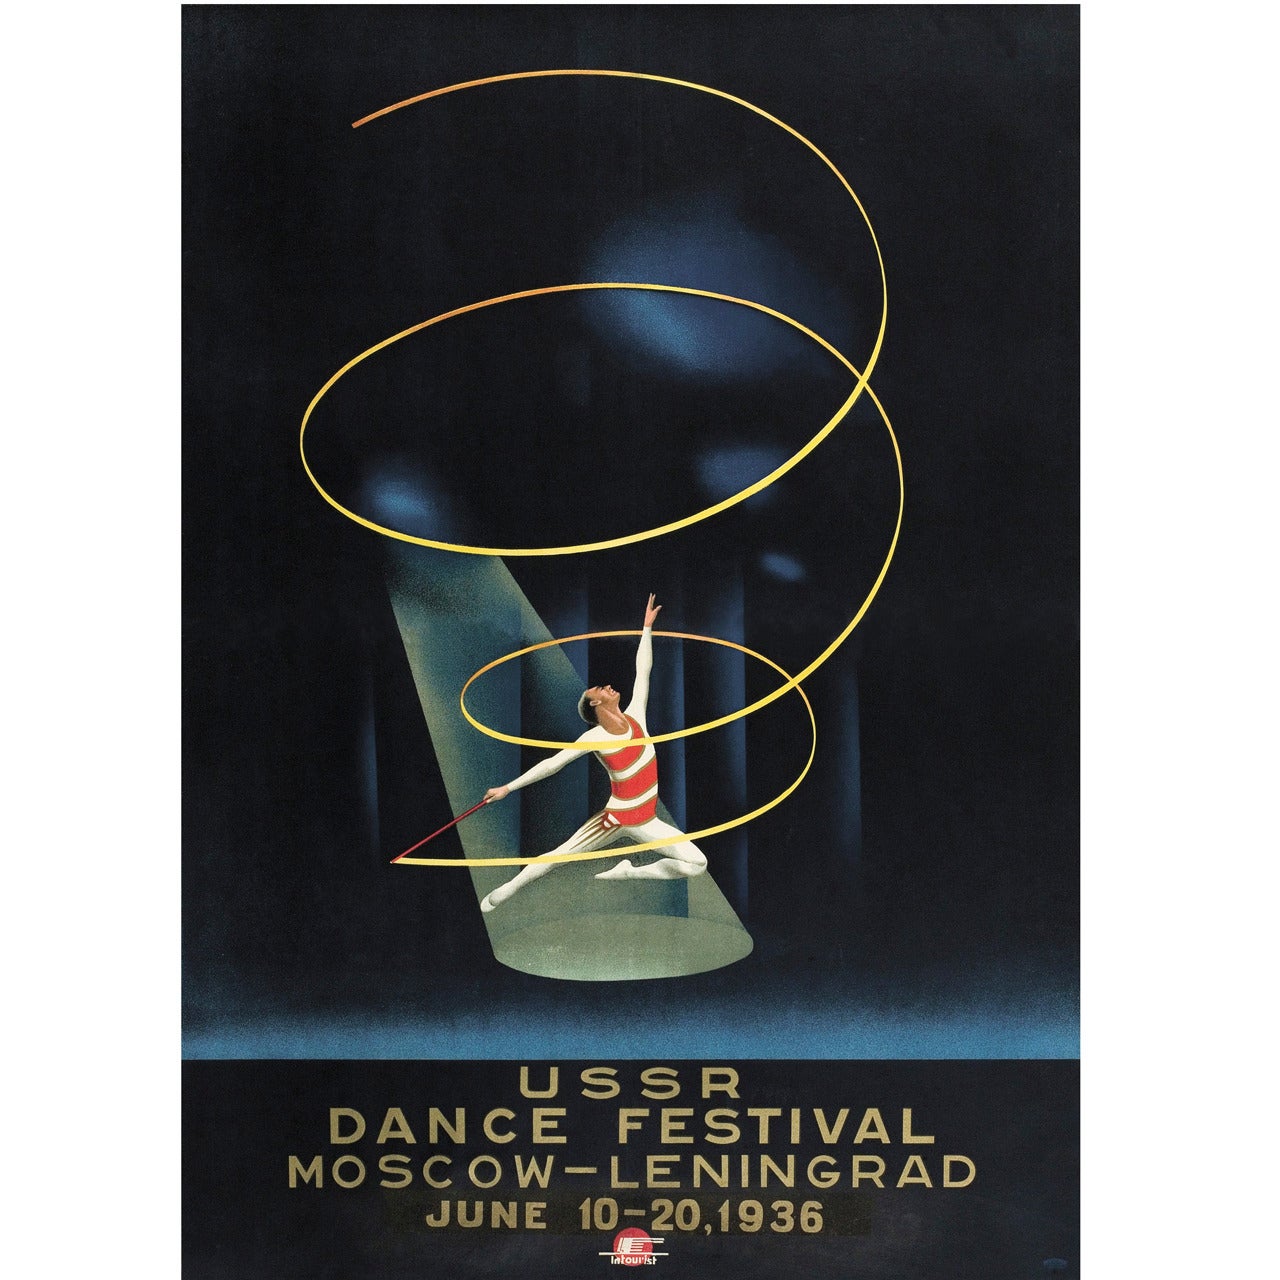 Original Vintage Art Deco Poster by Nikolai Zhukov, USSR Dance Festival 1936